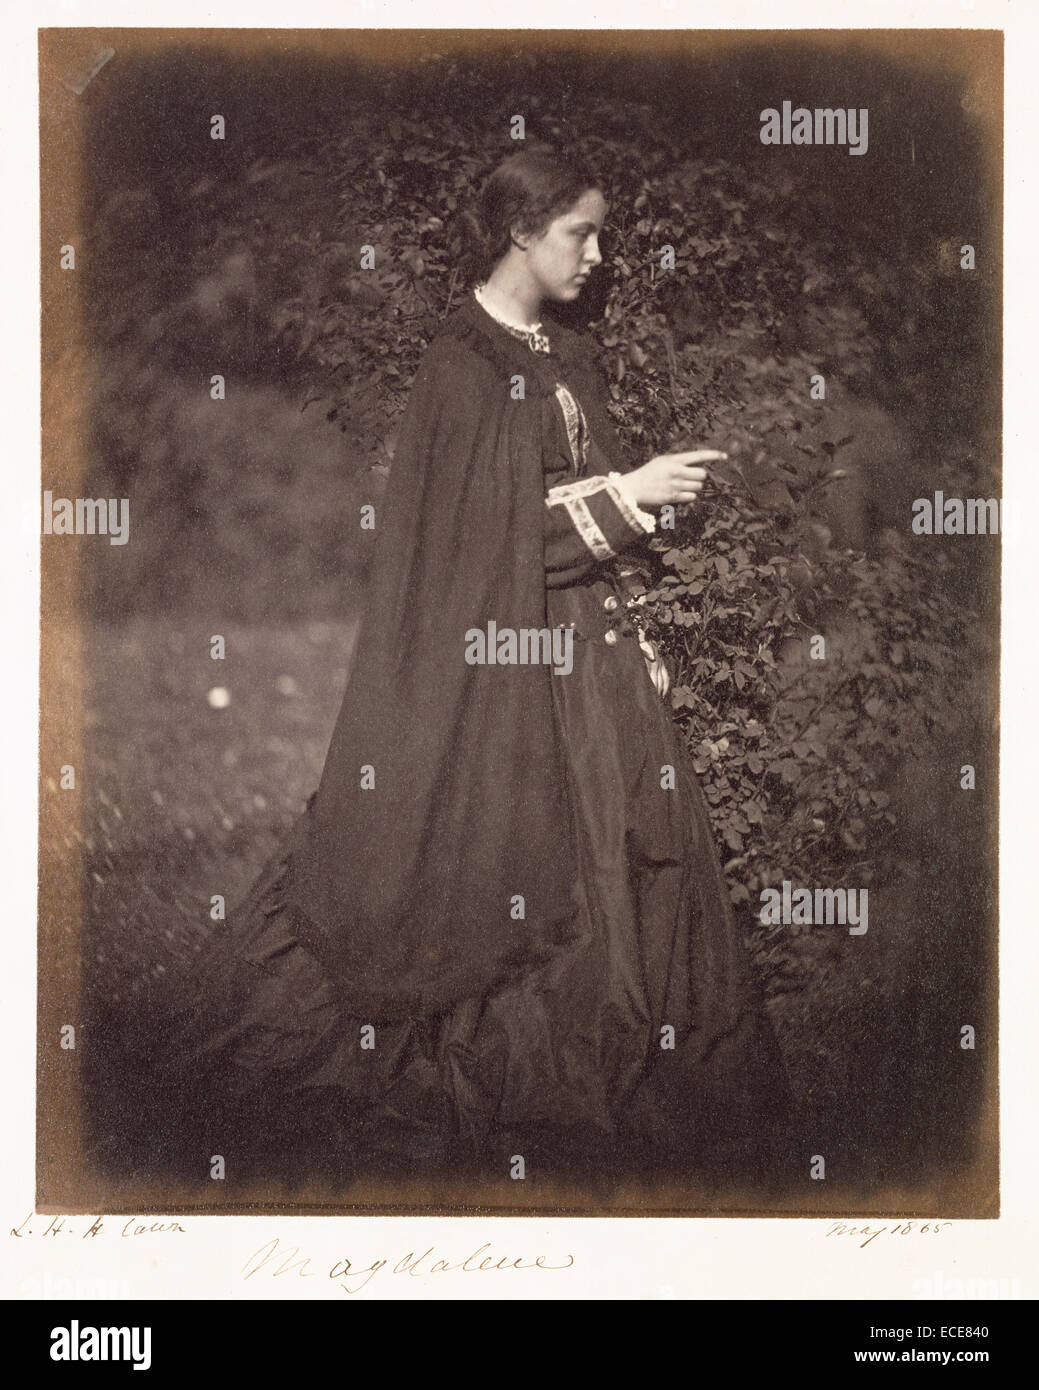 Magdala (Brookfield) ; Julia Margaret Cameron, britannique, né en Inde, 1815 - 1879 ; Londres, Angleterre, Europe ; mai 1865 ; à l'albumine argentique ; Image : 27,1 x 22,2 cm (10 11/16 x 8 3/4 in.) Banque D'Images